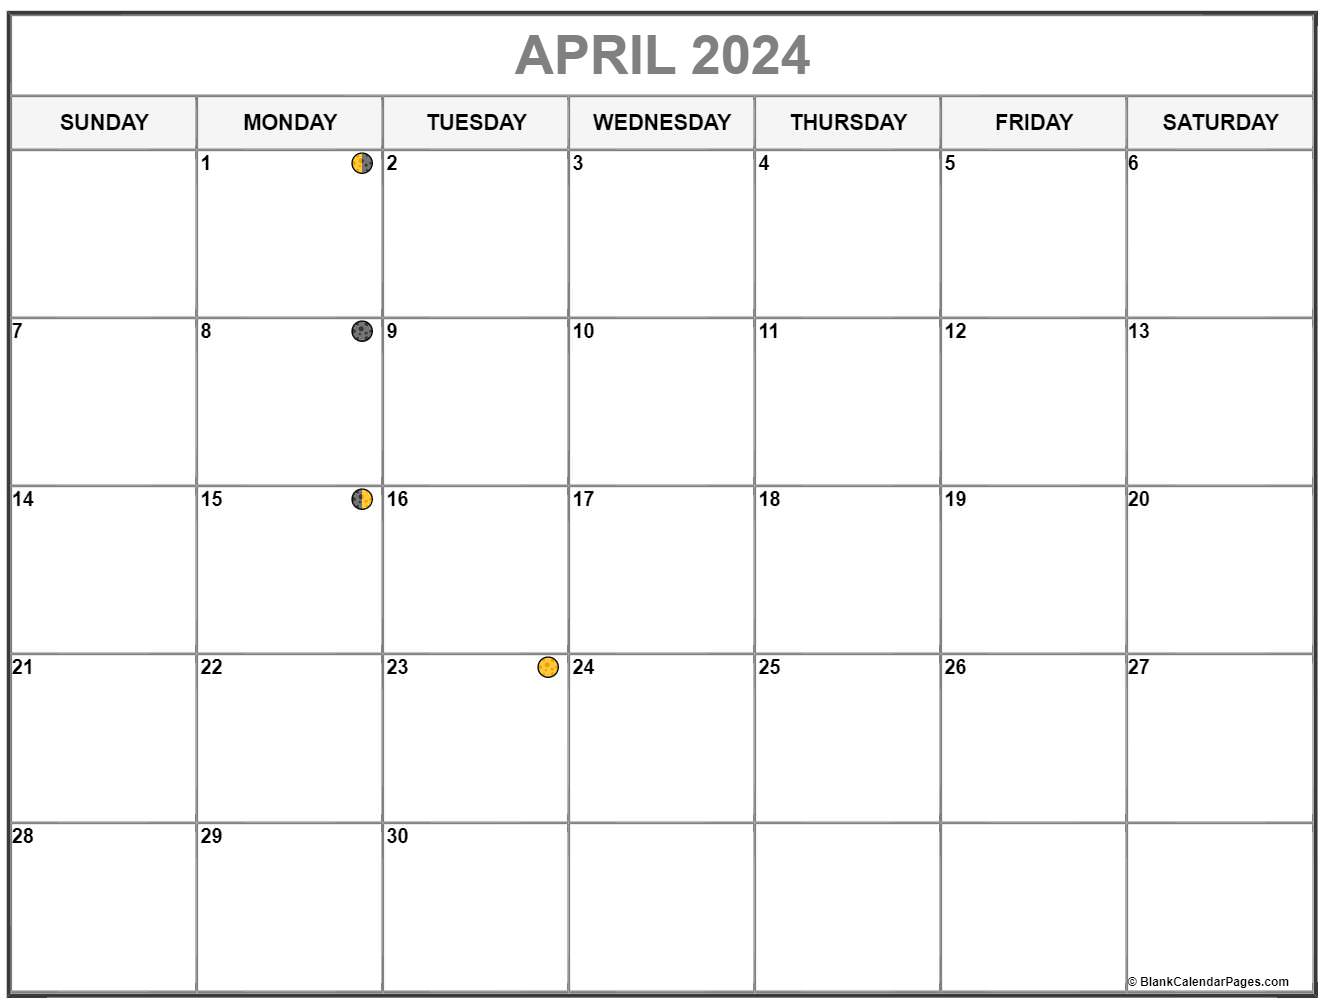 lunar calendar april 2021 April 2021 Lunar Calendar Moon Phase Calendar lunar calendar april 2021